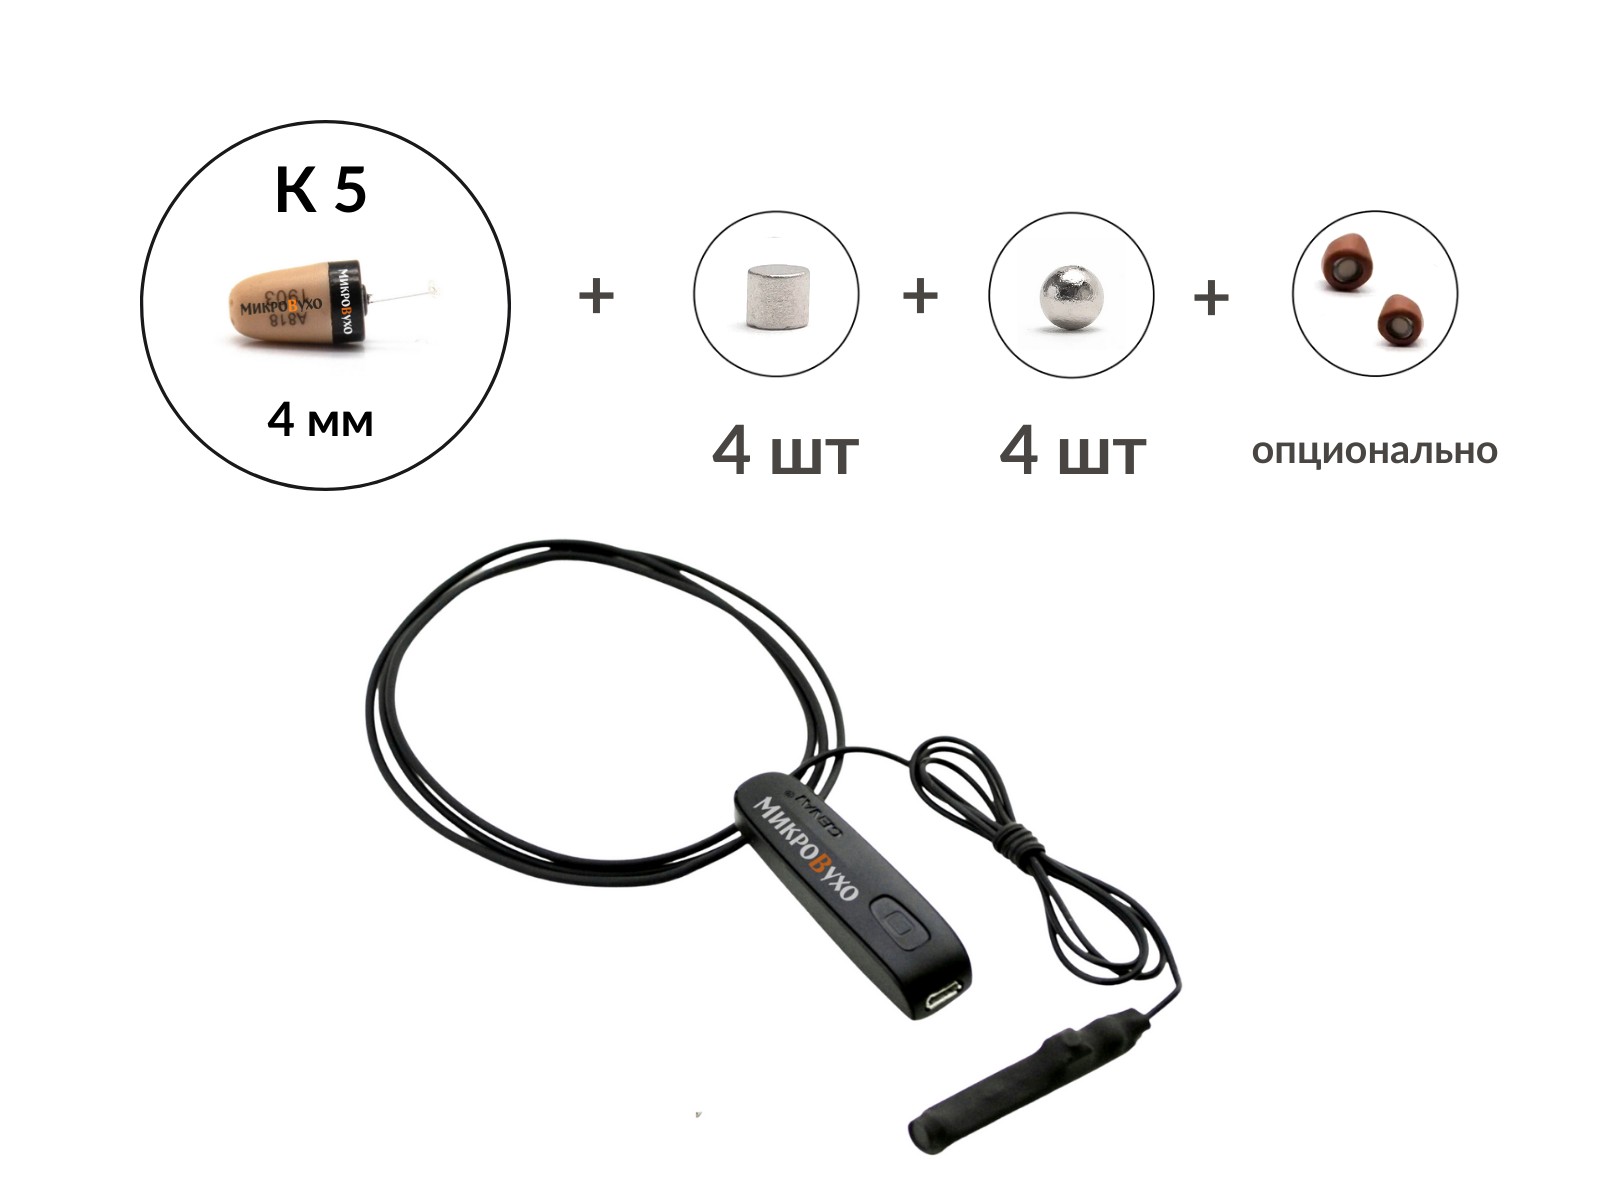 Bluetooth Basic с кнопкой-пищалкой, капсулой K5 4 мм и магнитами 2 мм